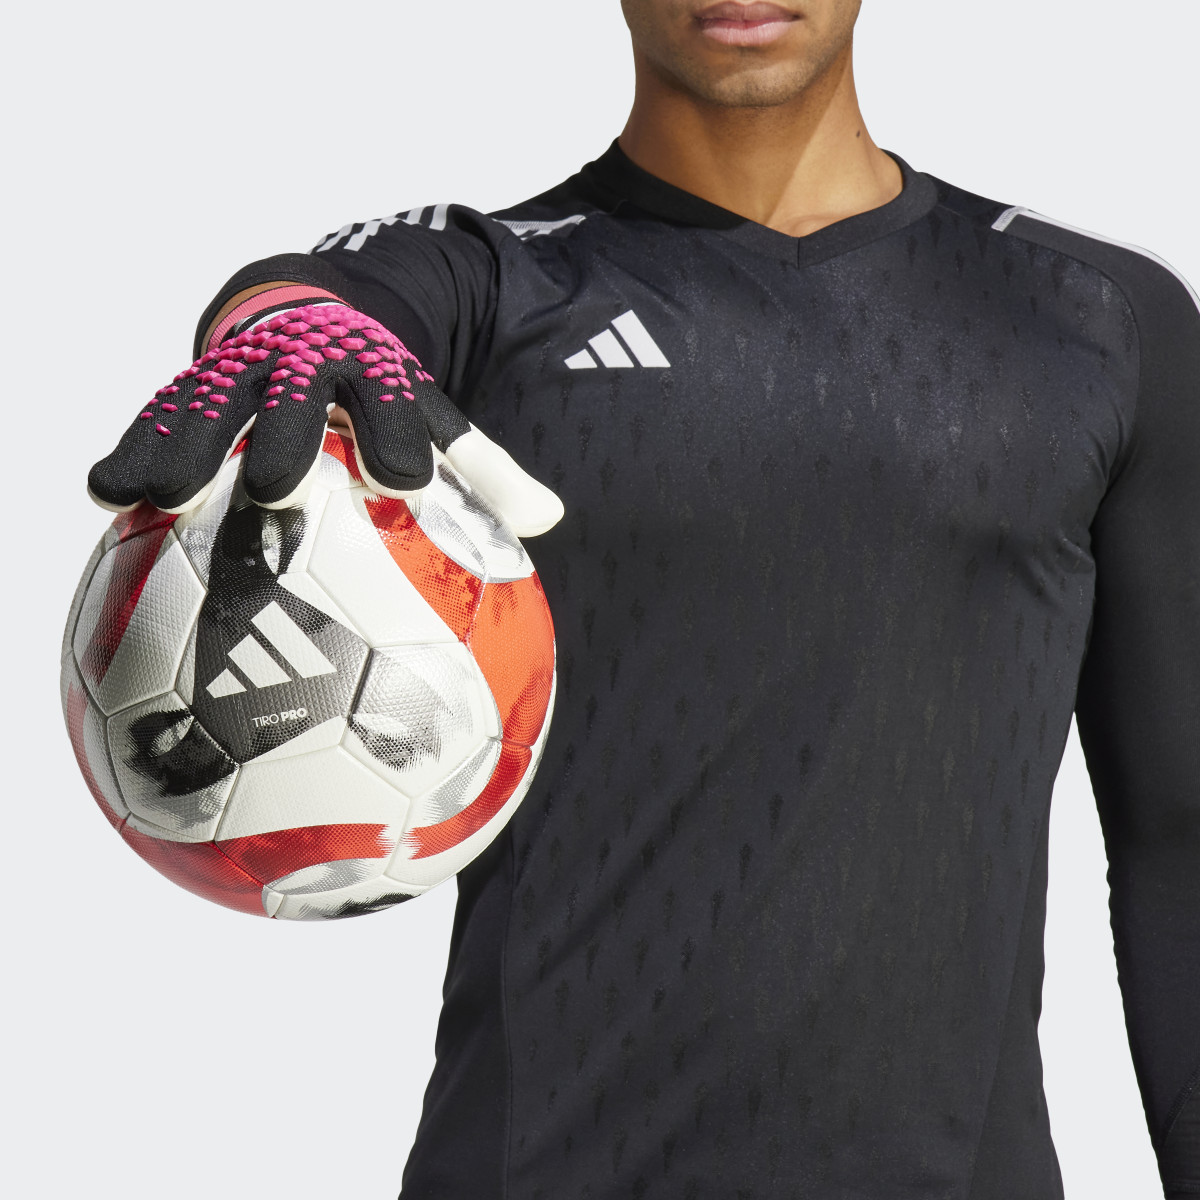 Adidas Predator Pro Promo Goalkeeper Gloves. 7